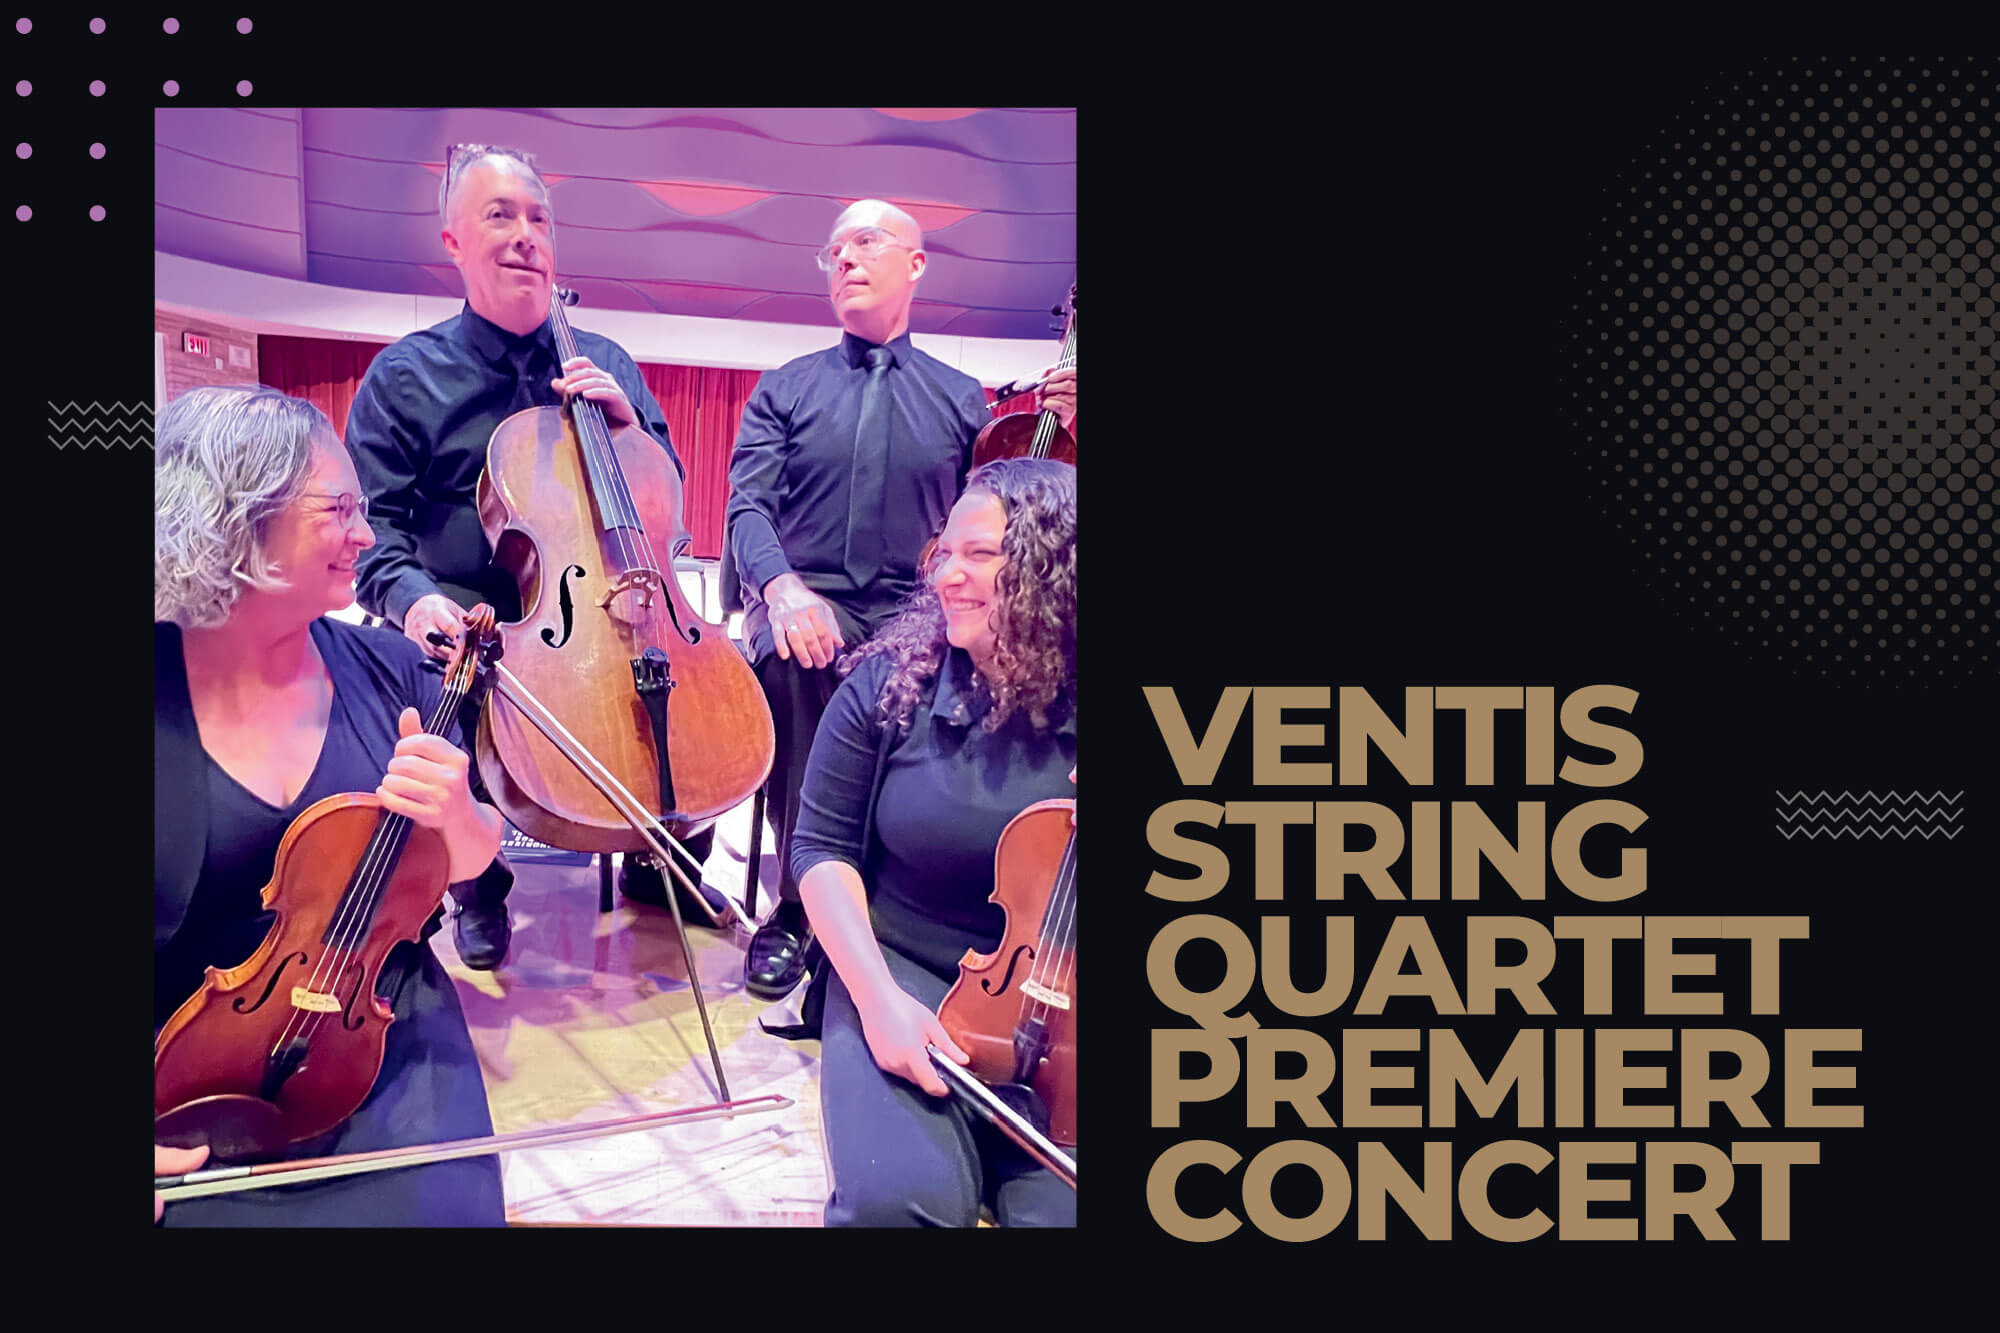 Image for Ventis Sting Quartet Concert press release.